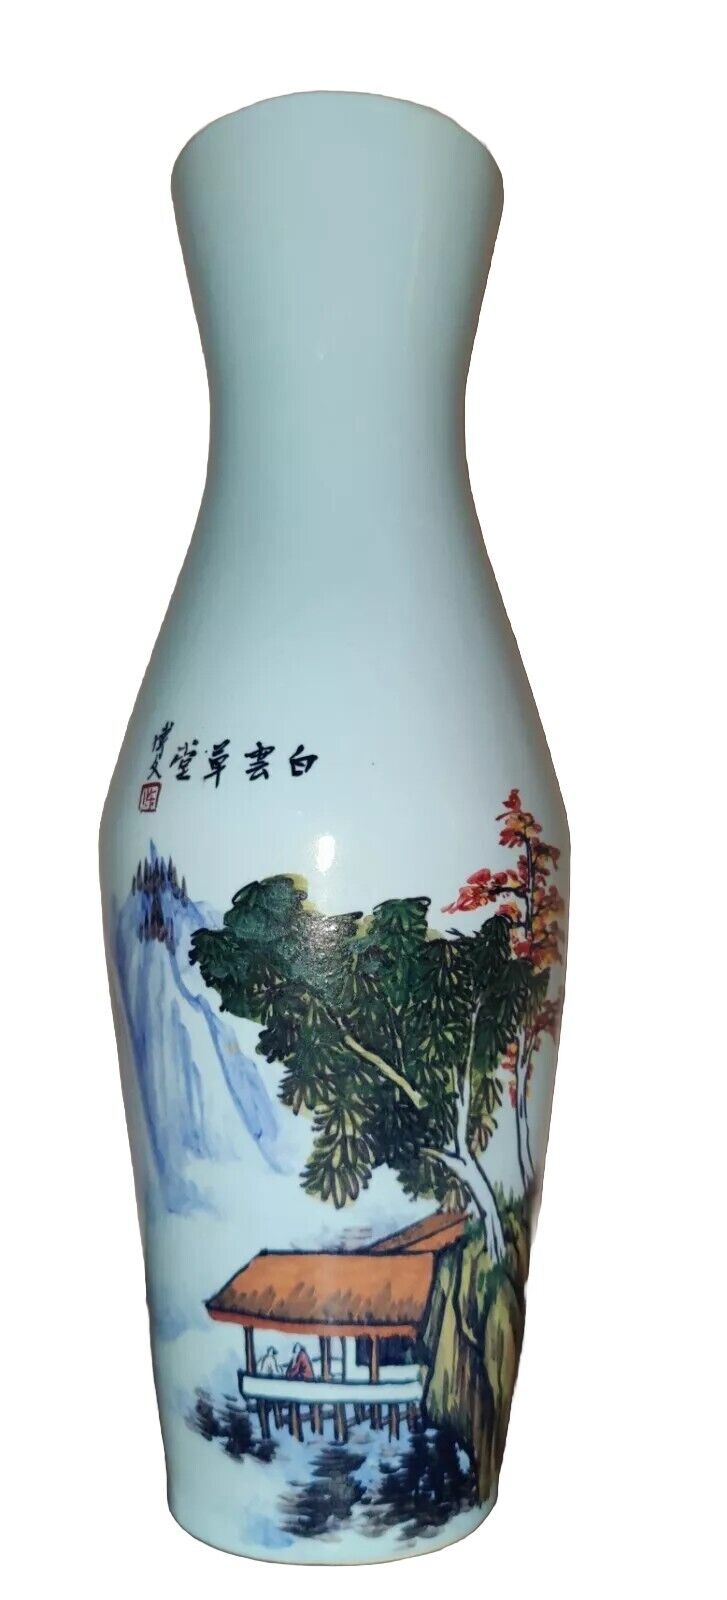 VTG Chinese Vase Blue Hand Painted Landscape Signed Ceramic Taiwan ROC